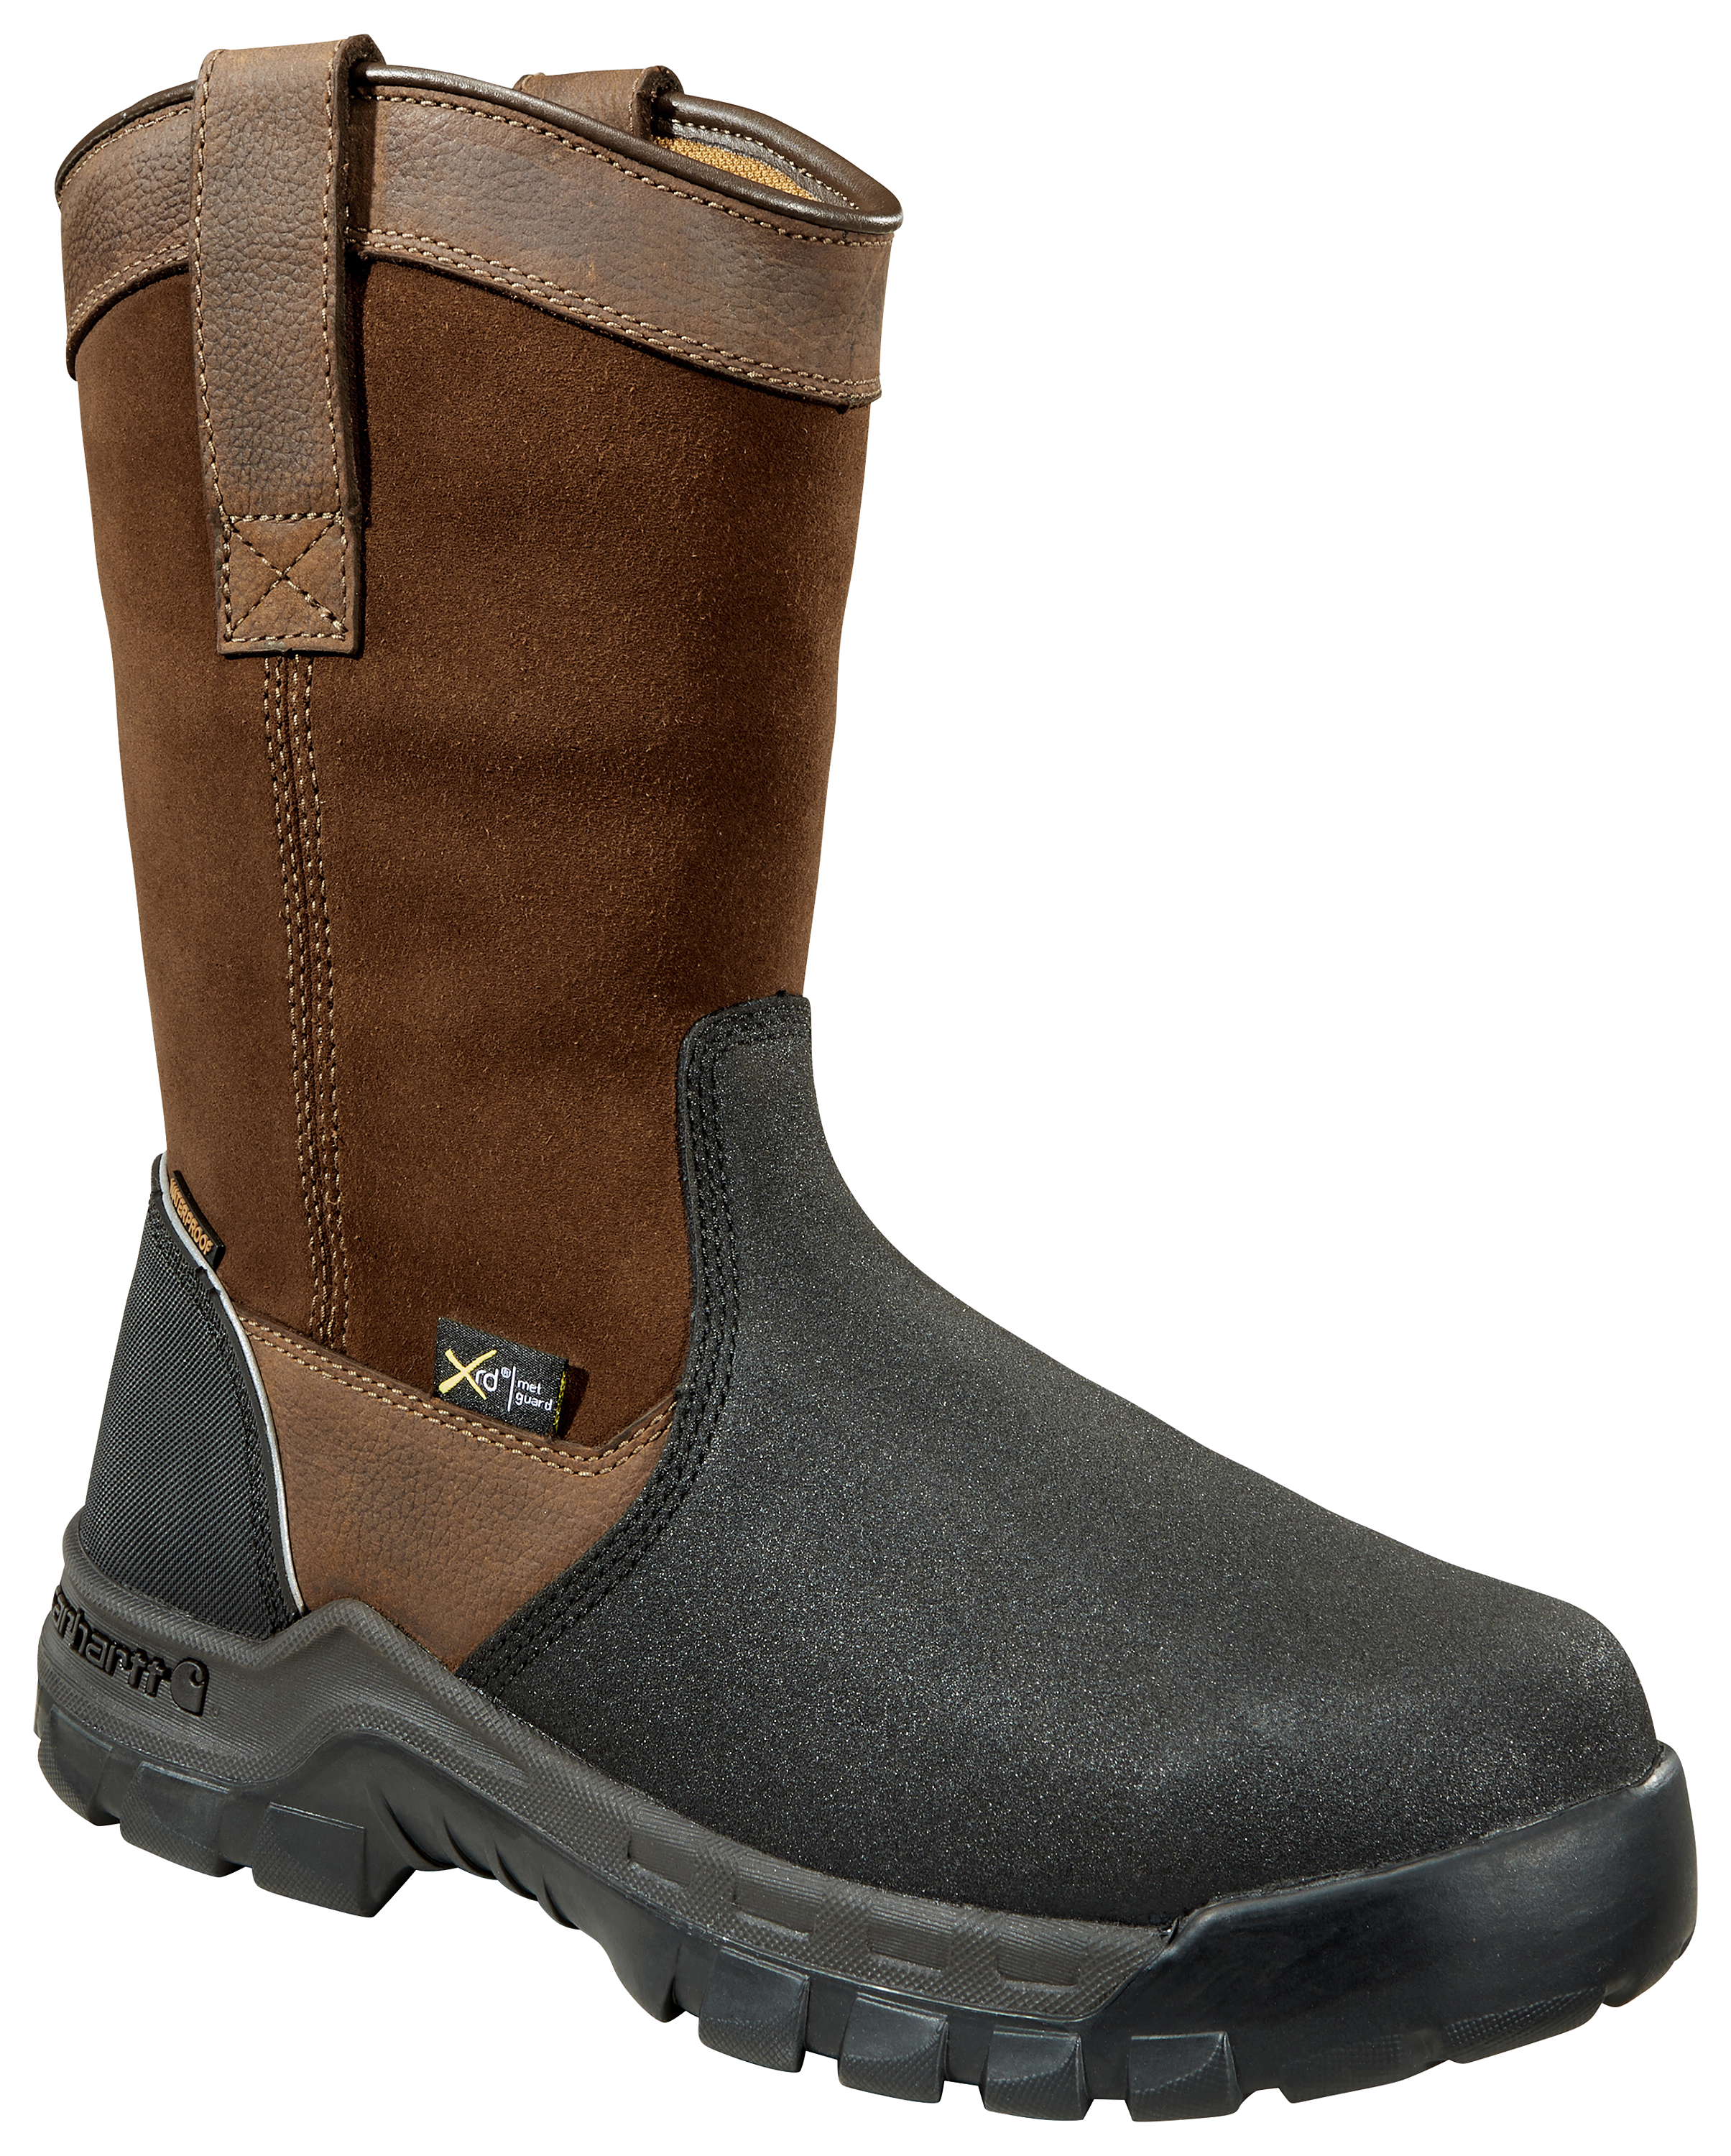 Carhartt Met Guard Waterproof Safety Toe Work Boots for Men